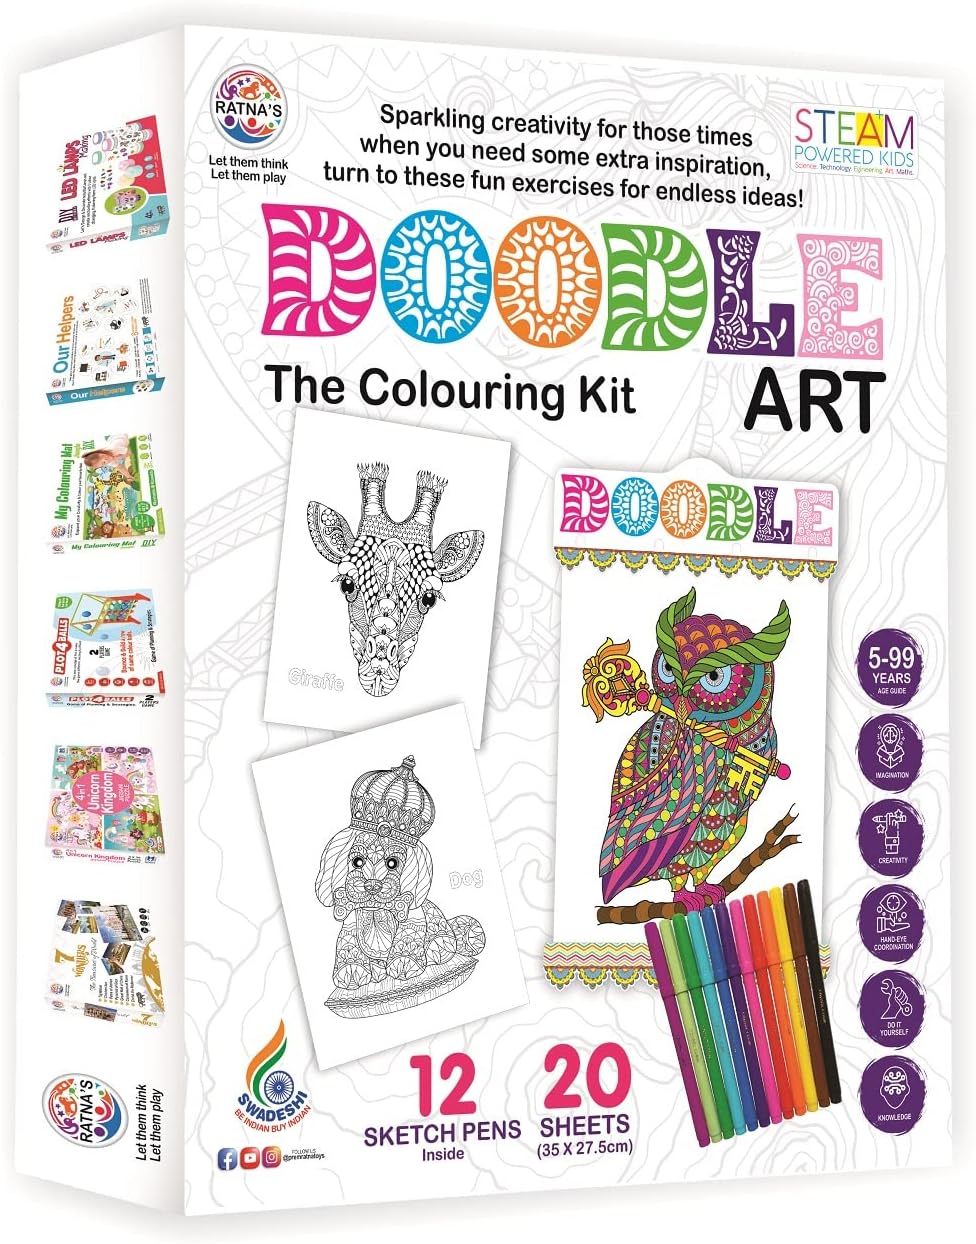 RATNA'S Doodle Art Colouring Kit - 20 Sheets & 12 Sketch Pens